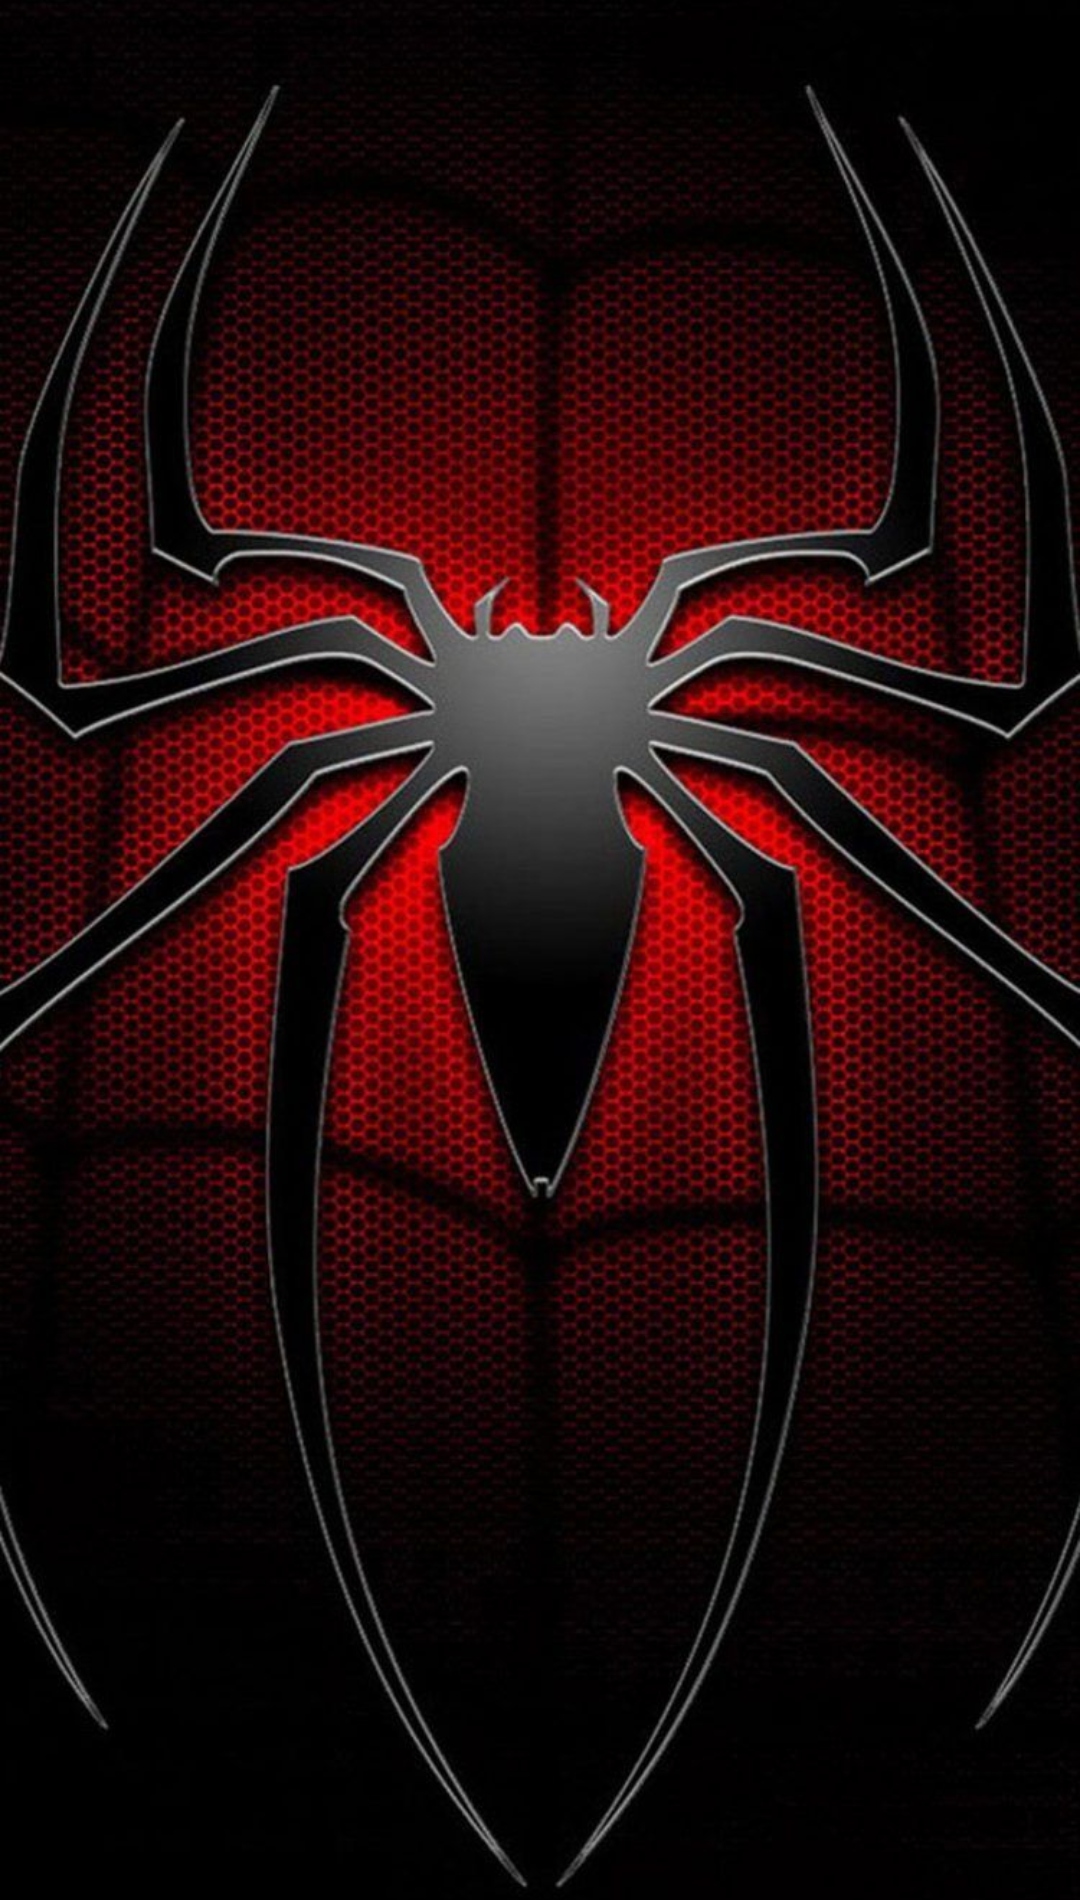 Spider Man Symbol Images